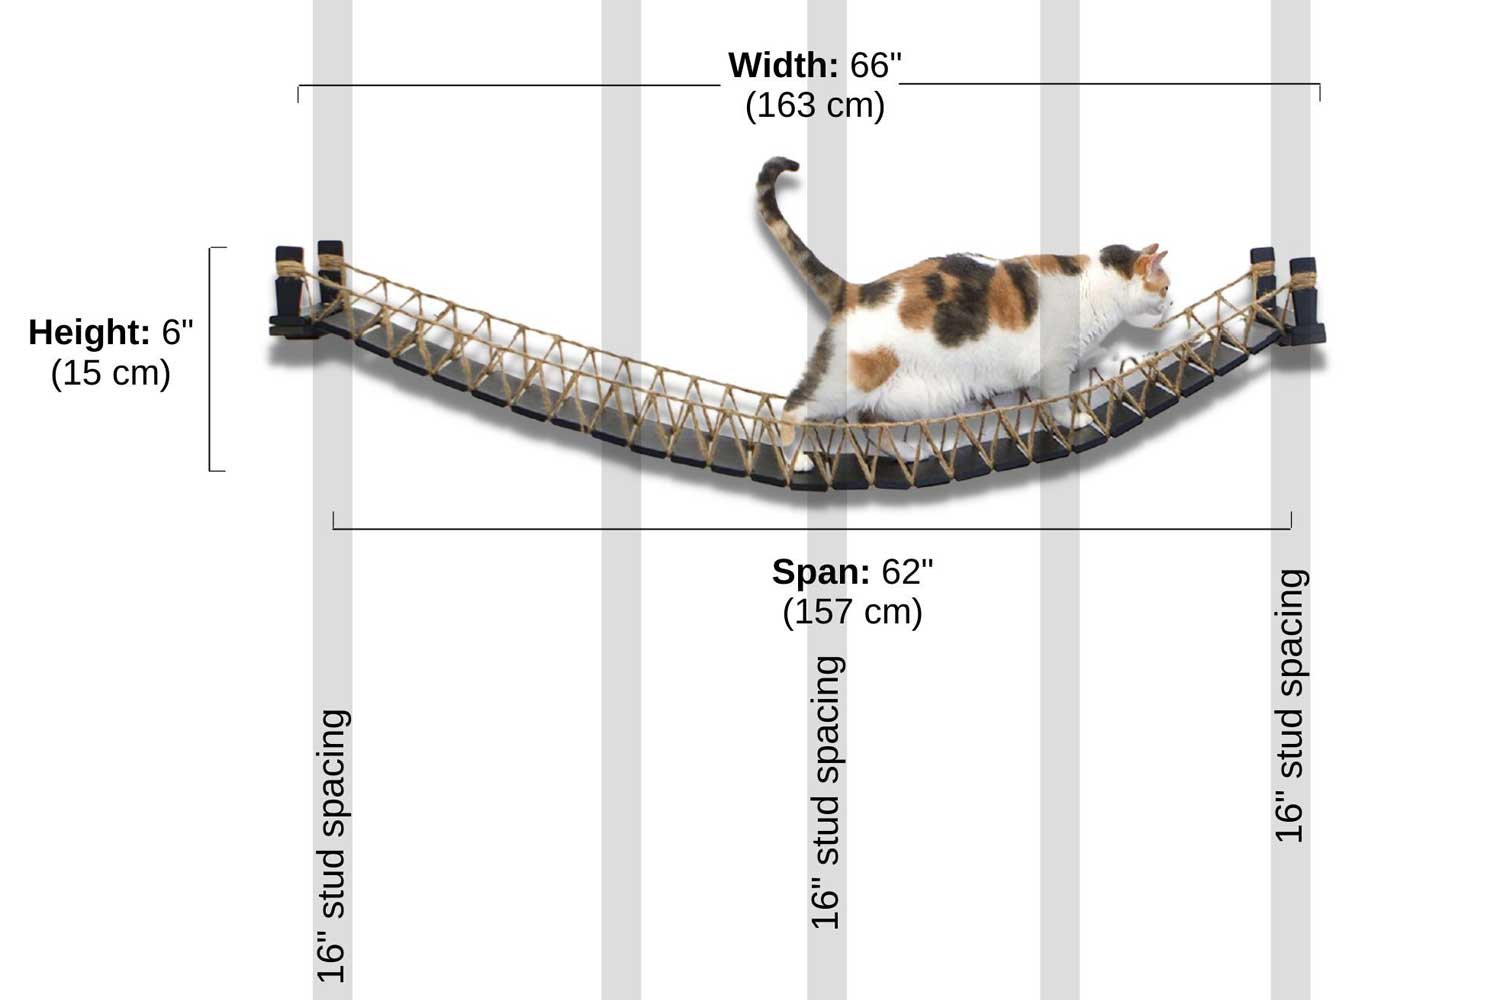 Measurements of 66-Inch Cat Bridge